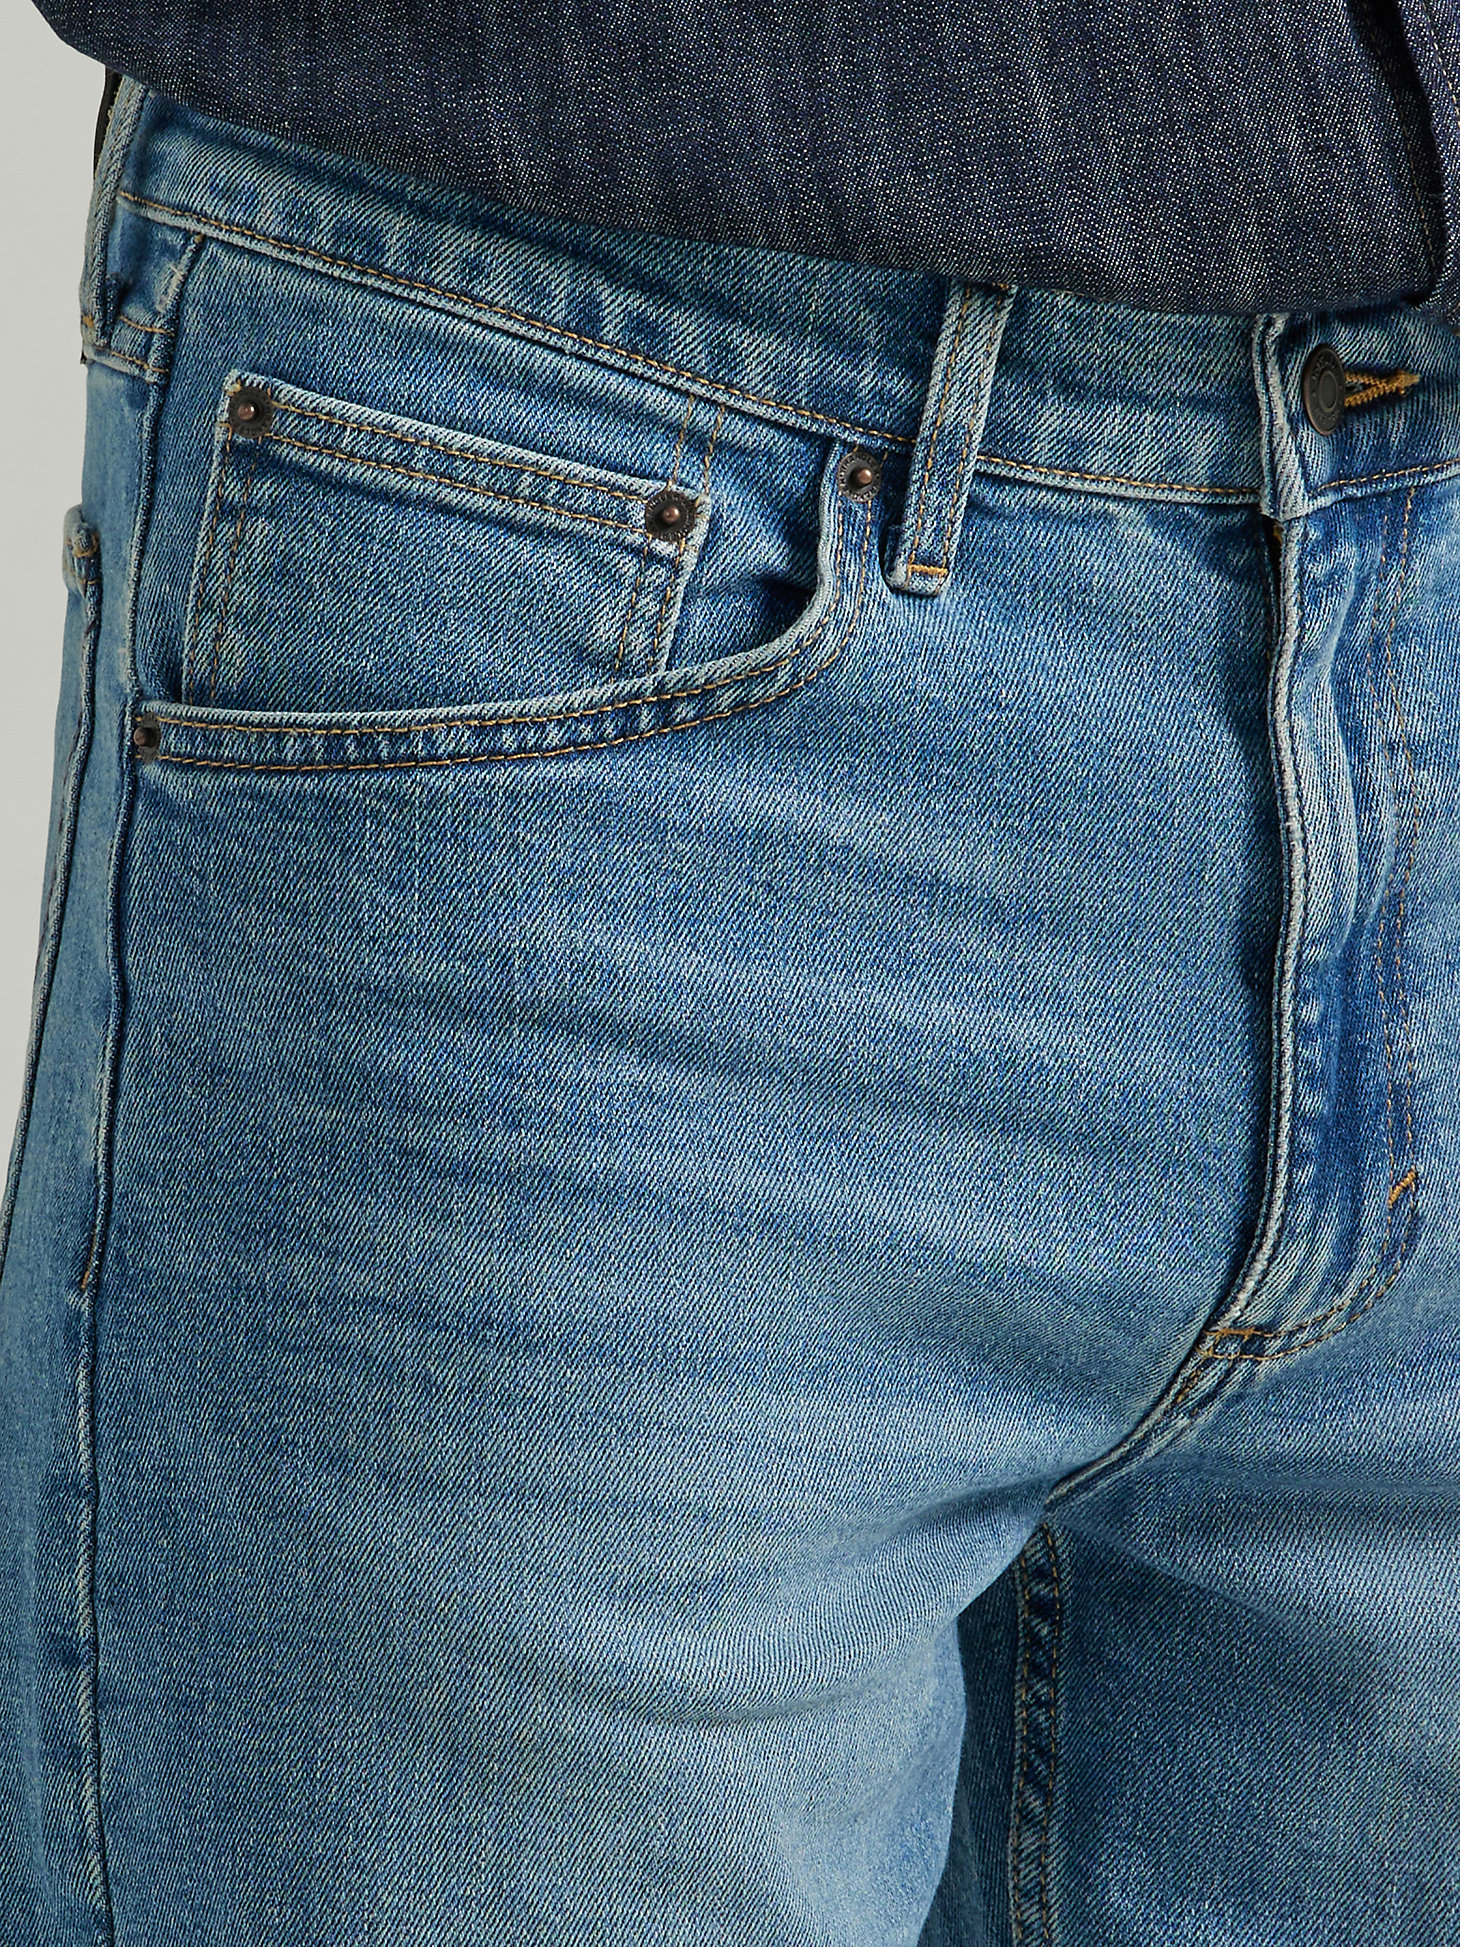 Men's Regular Fit Flex Jean in Light Wash alternative view 5